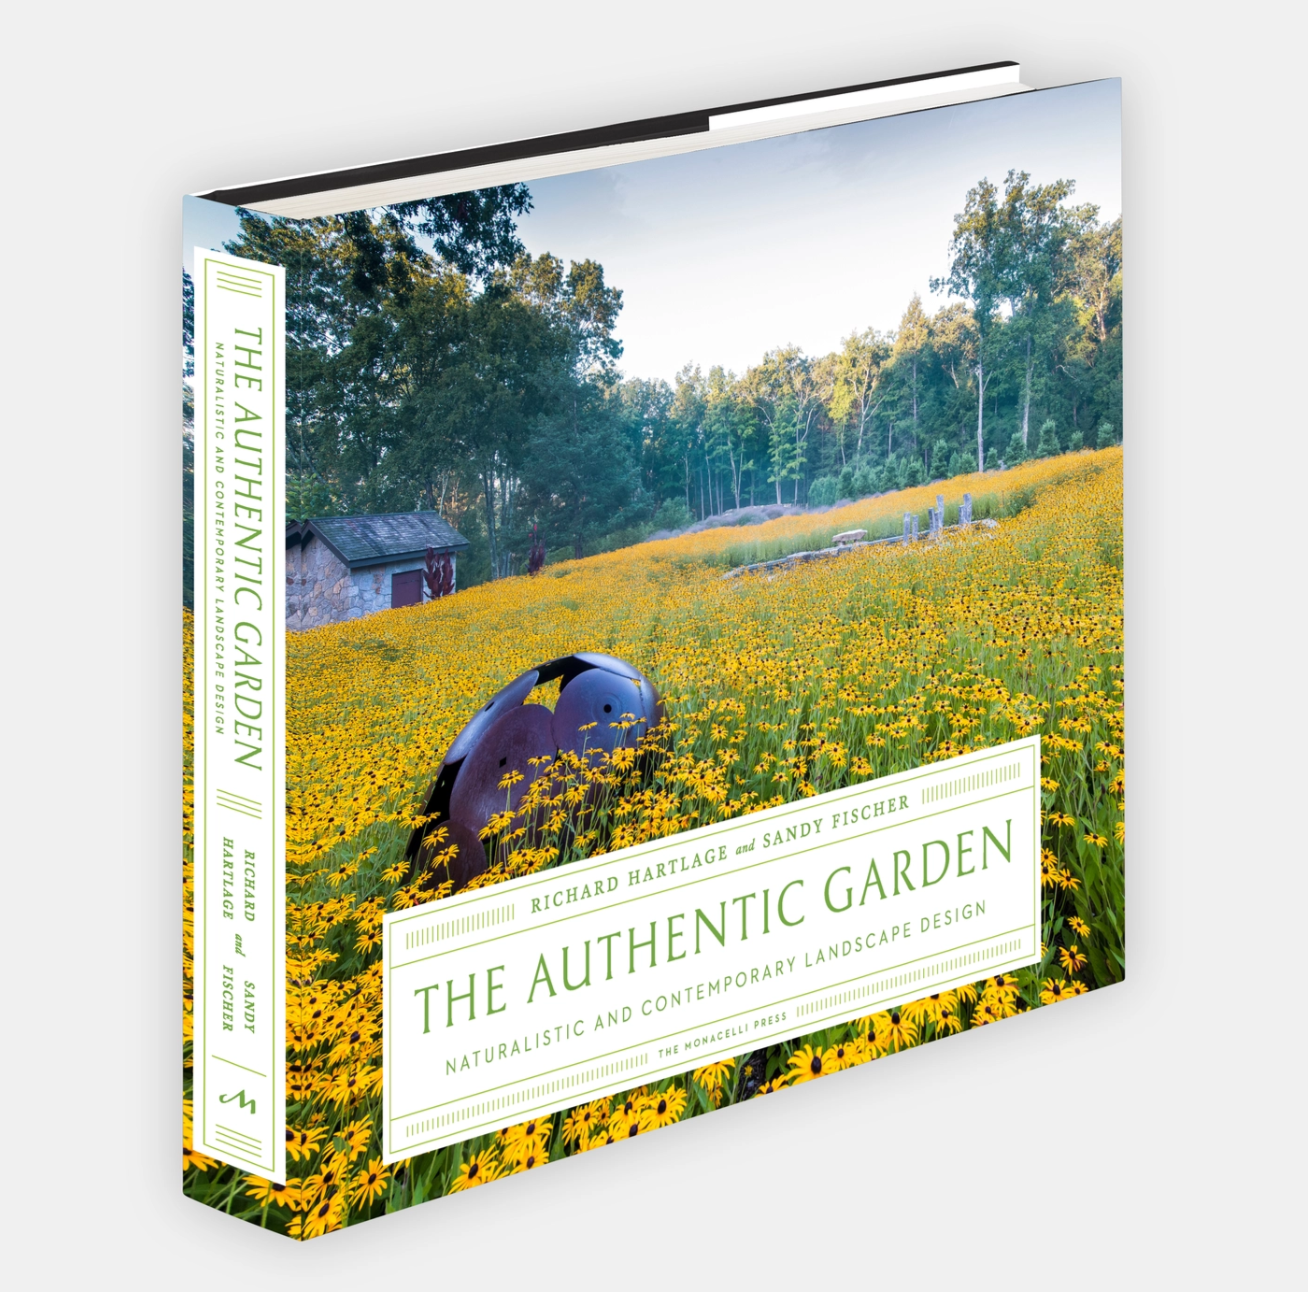 The Authentic Garden; Naturalistic and Contemporary Landscape Design